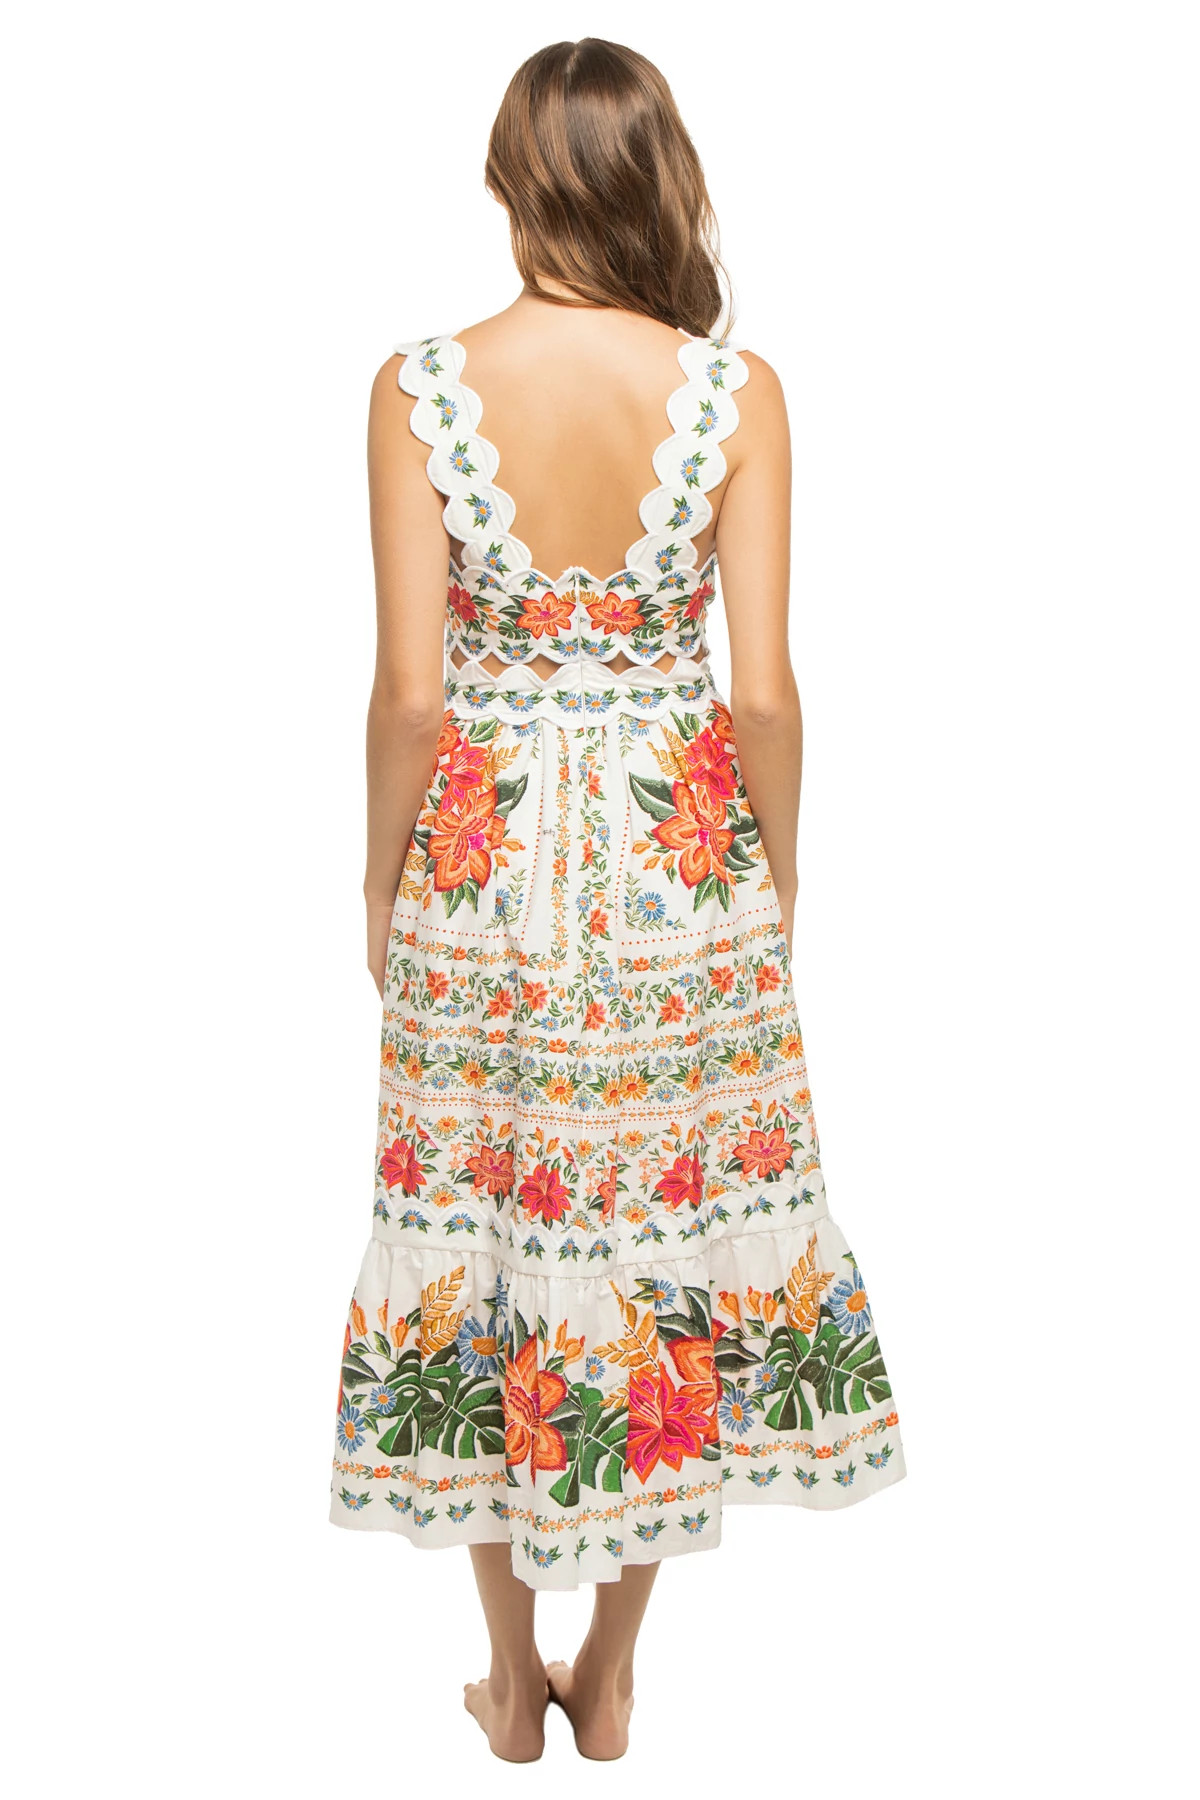 BLOOM GARDEN OFF-WHITE Bloom Garden Midi Dress image number 2